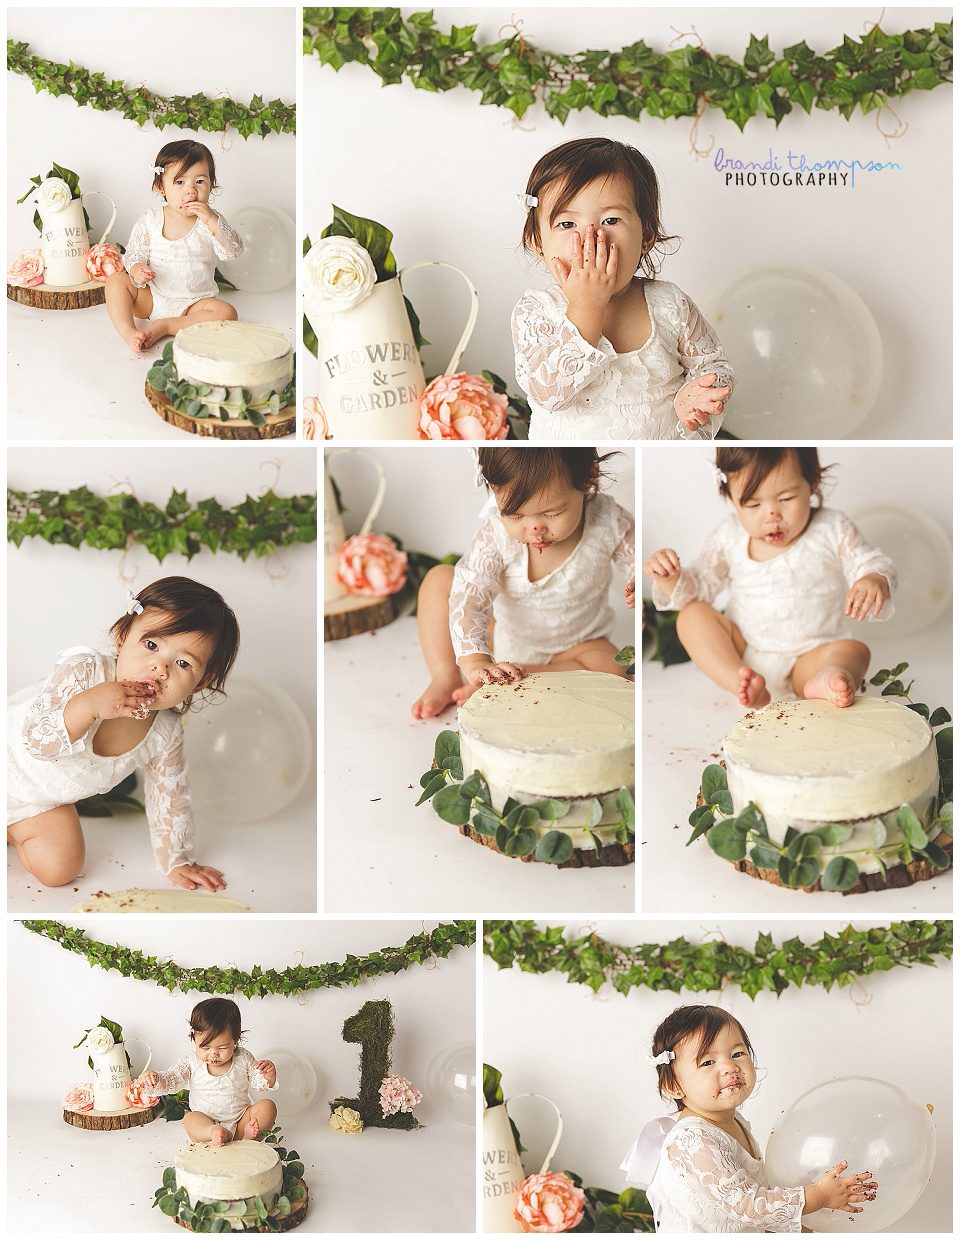 white, minimal garden inspired cake smash with baby girl in white lace onesie